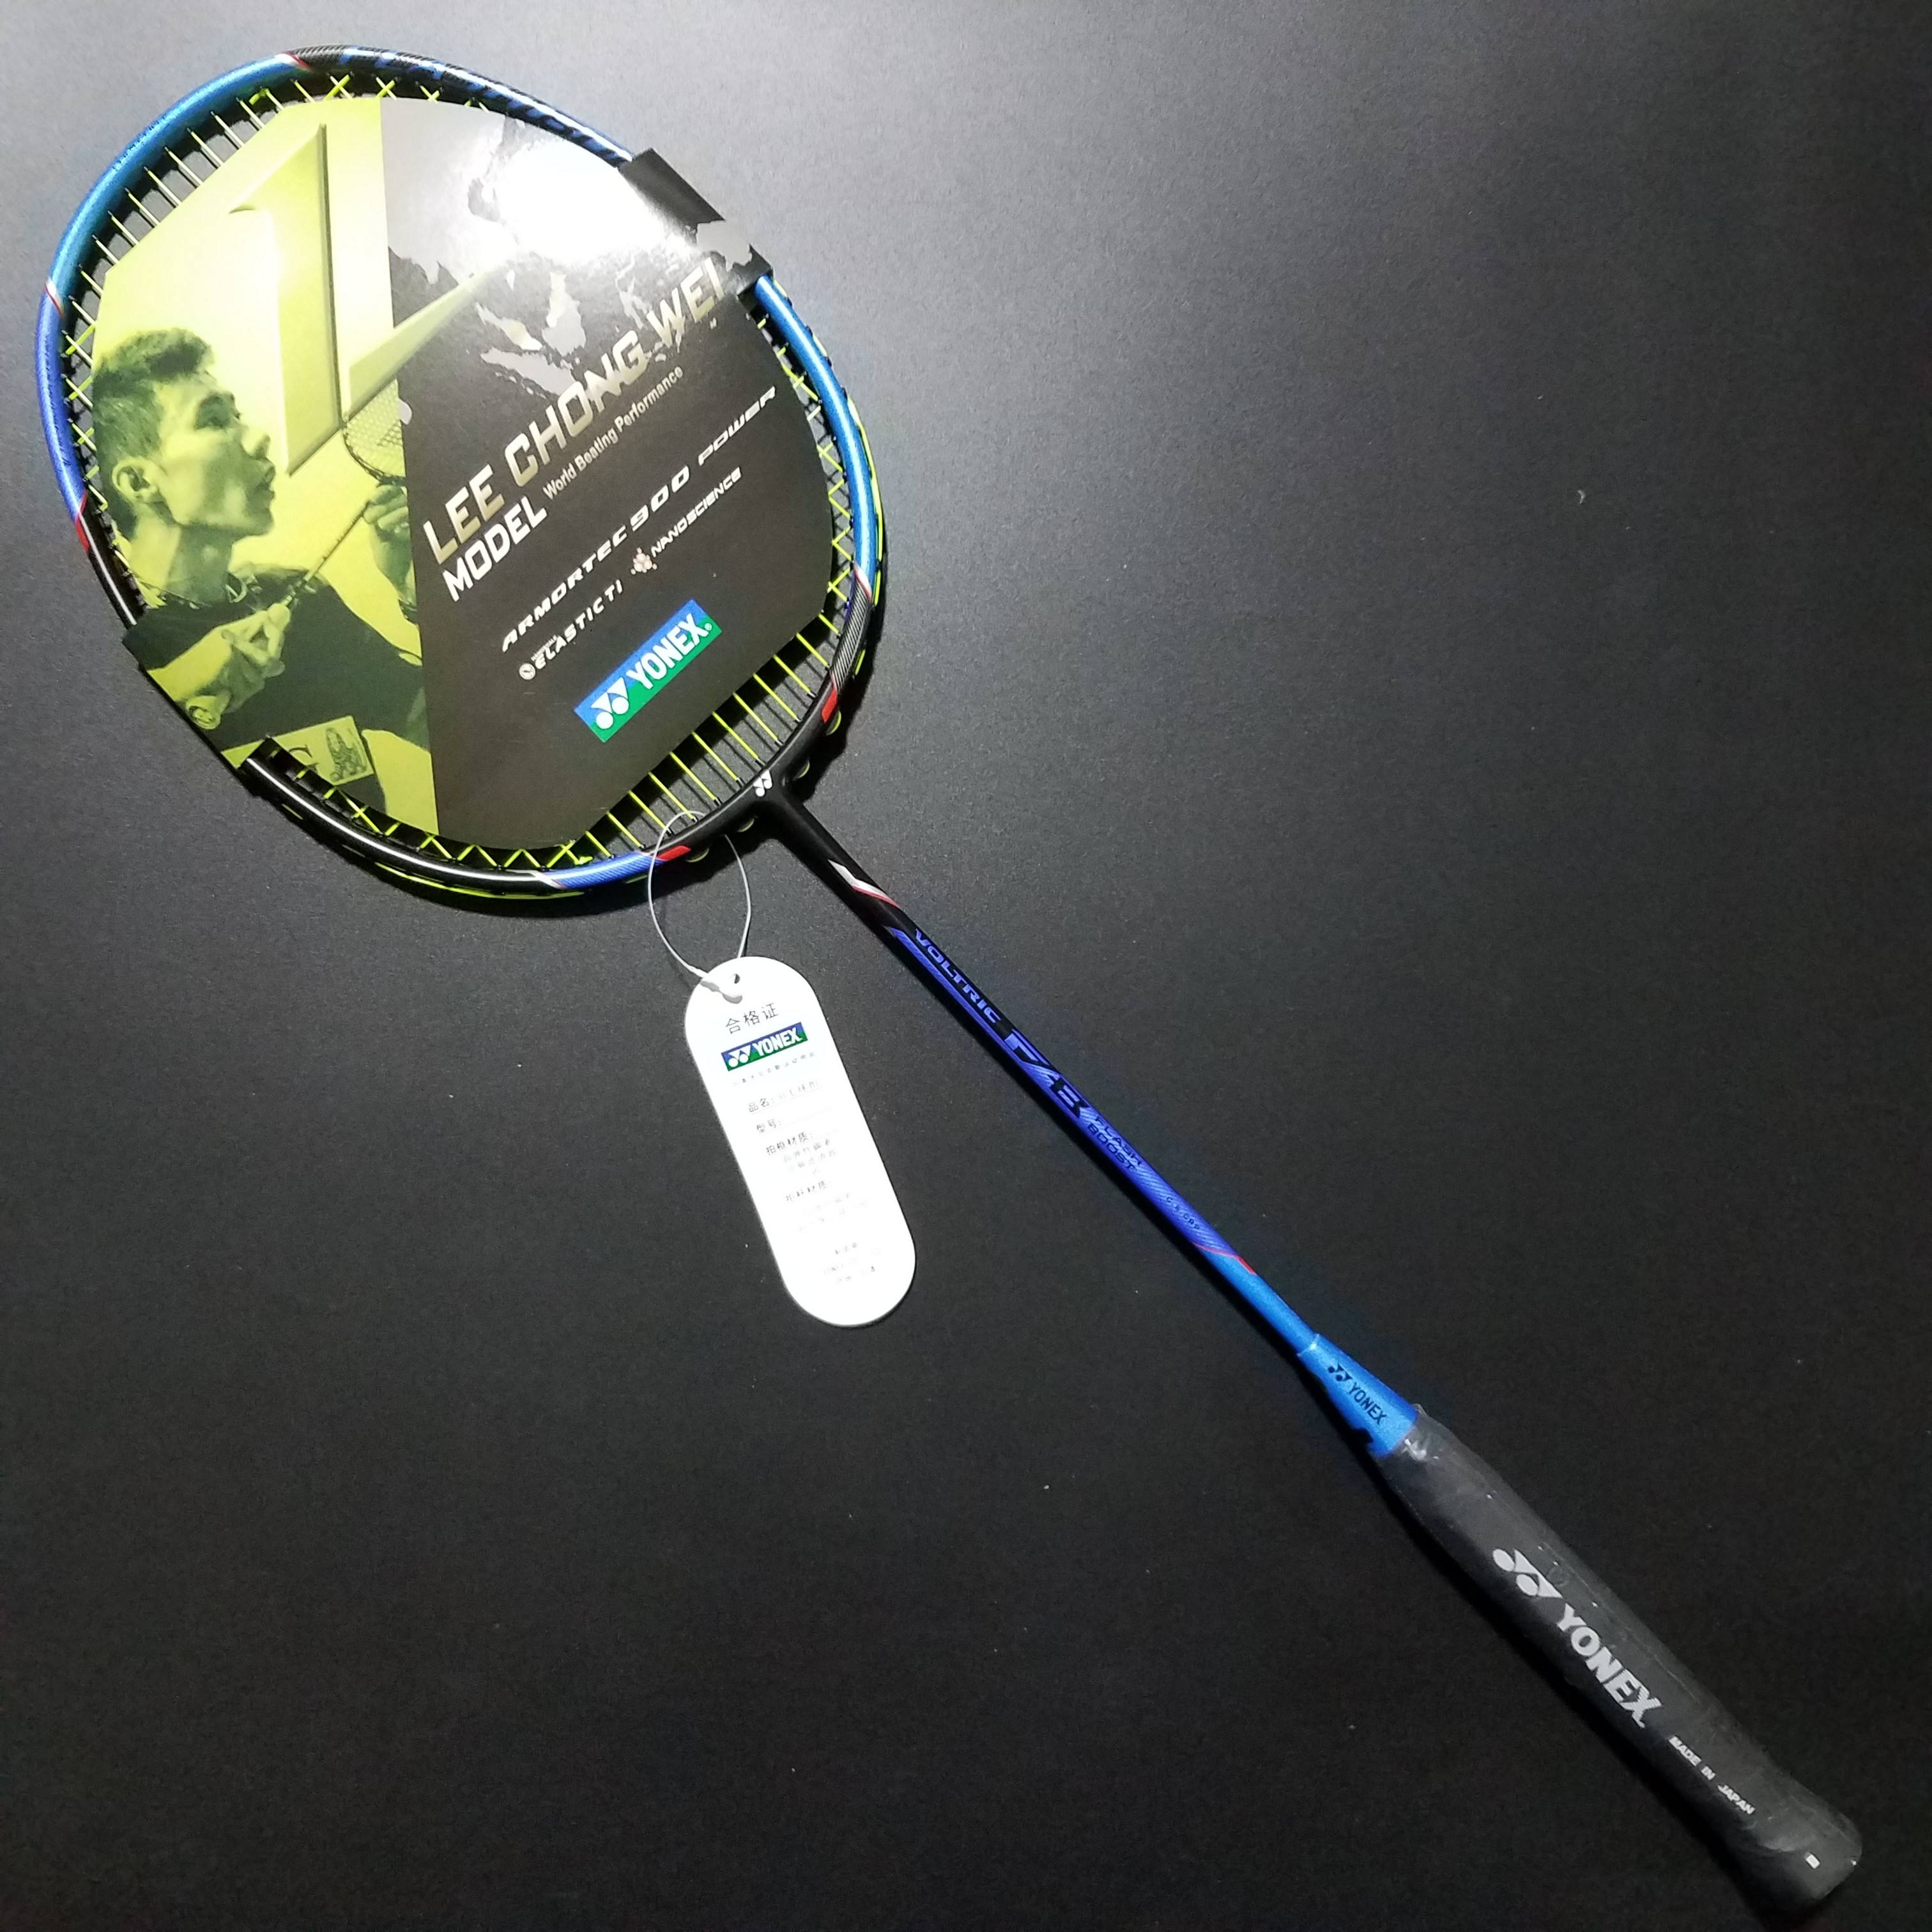 Original YONEX_ VOLTRIC FB Raket Badminton Carbon Fiber Made in japan High rebound Badminton Racket Free Badminton racket bag+ Keel hand glue and String